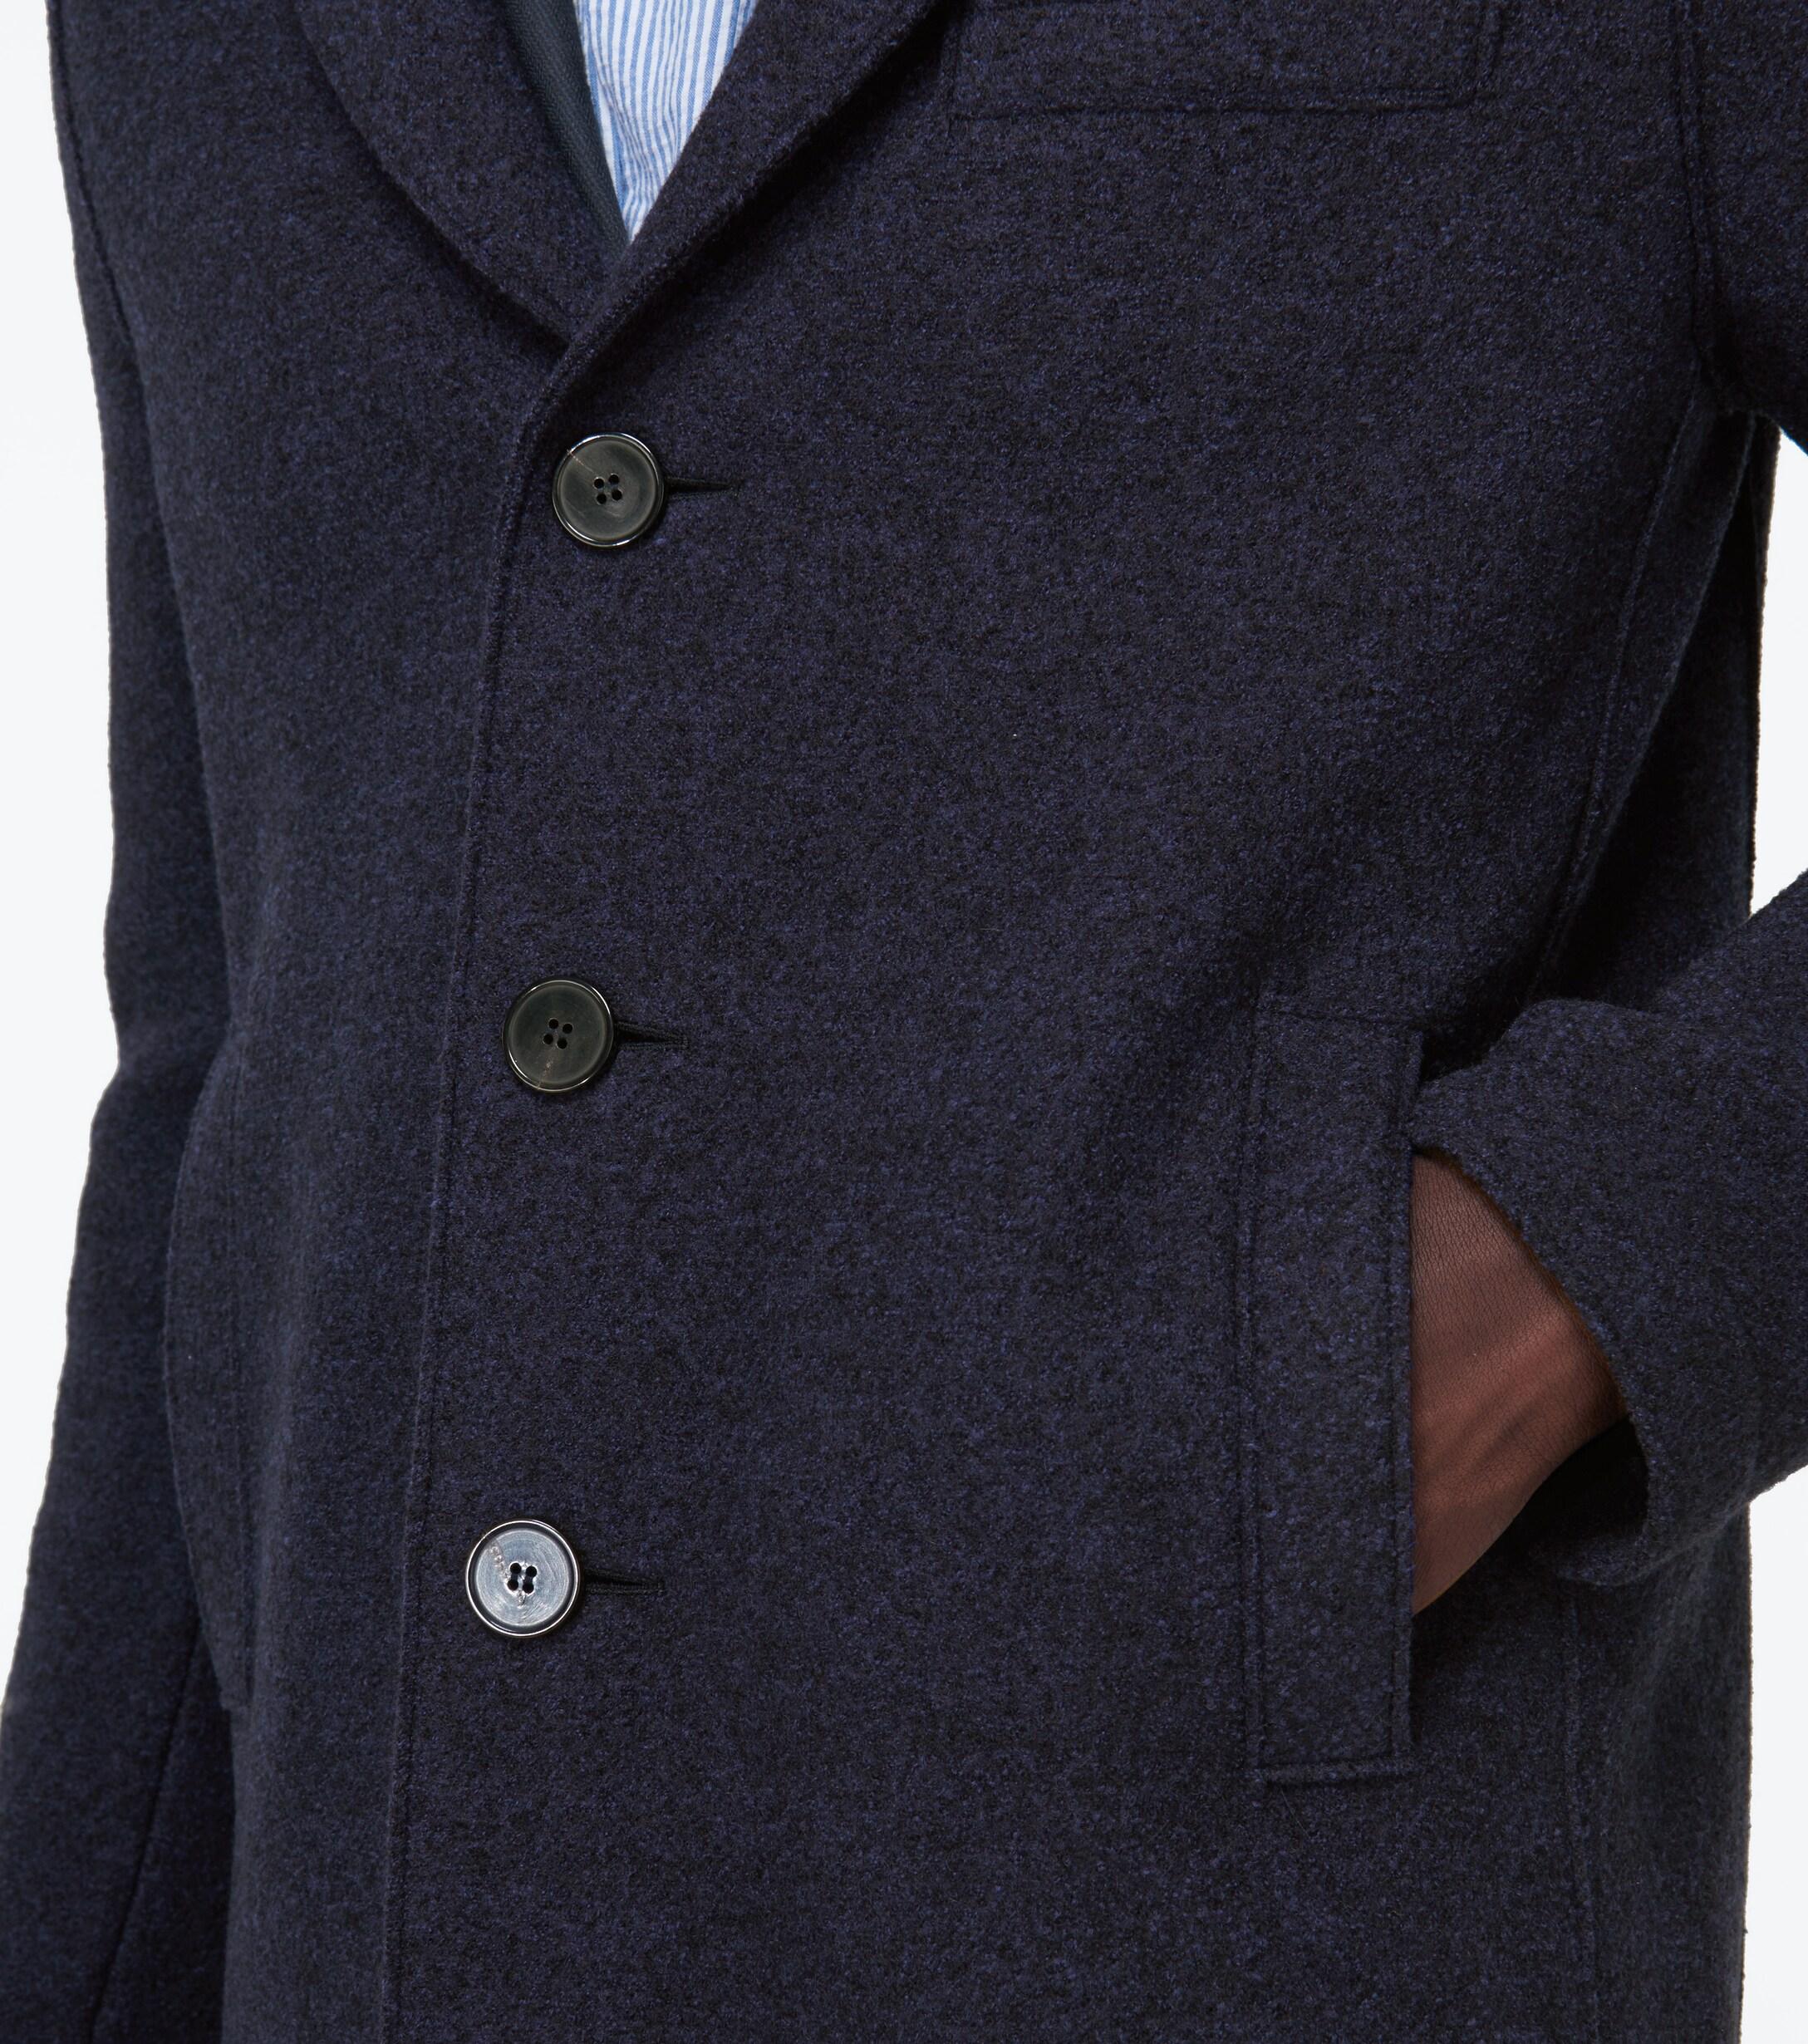 Harris Wharf London Single-breasted Boiled Wool Coat in Blue for Men - Lyst